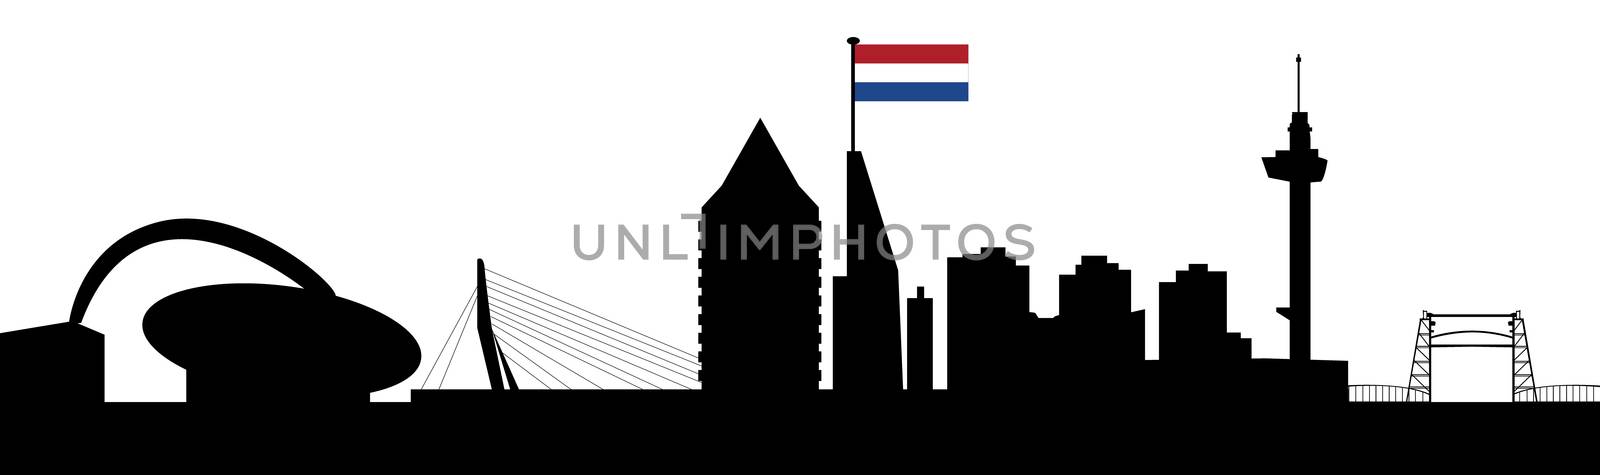 rotterdam skyline by compuinfoto